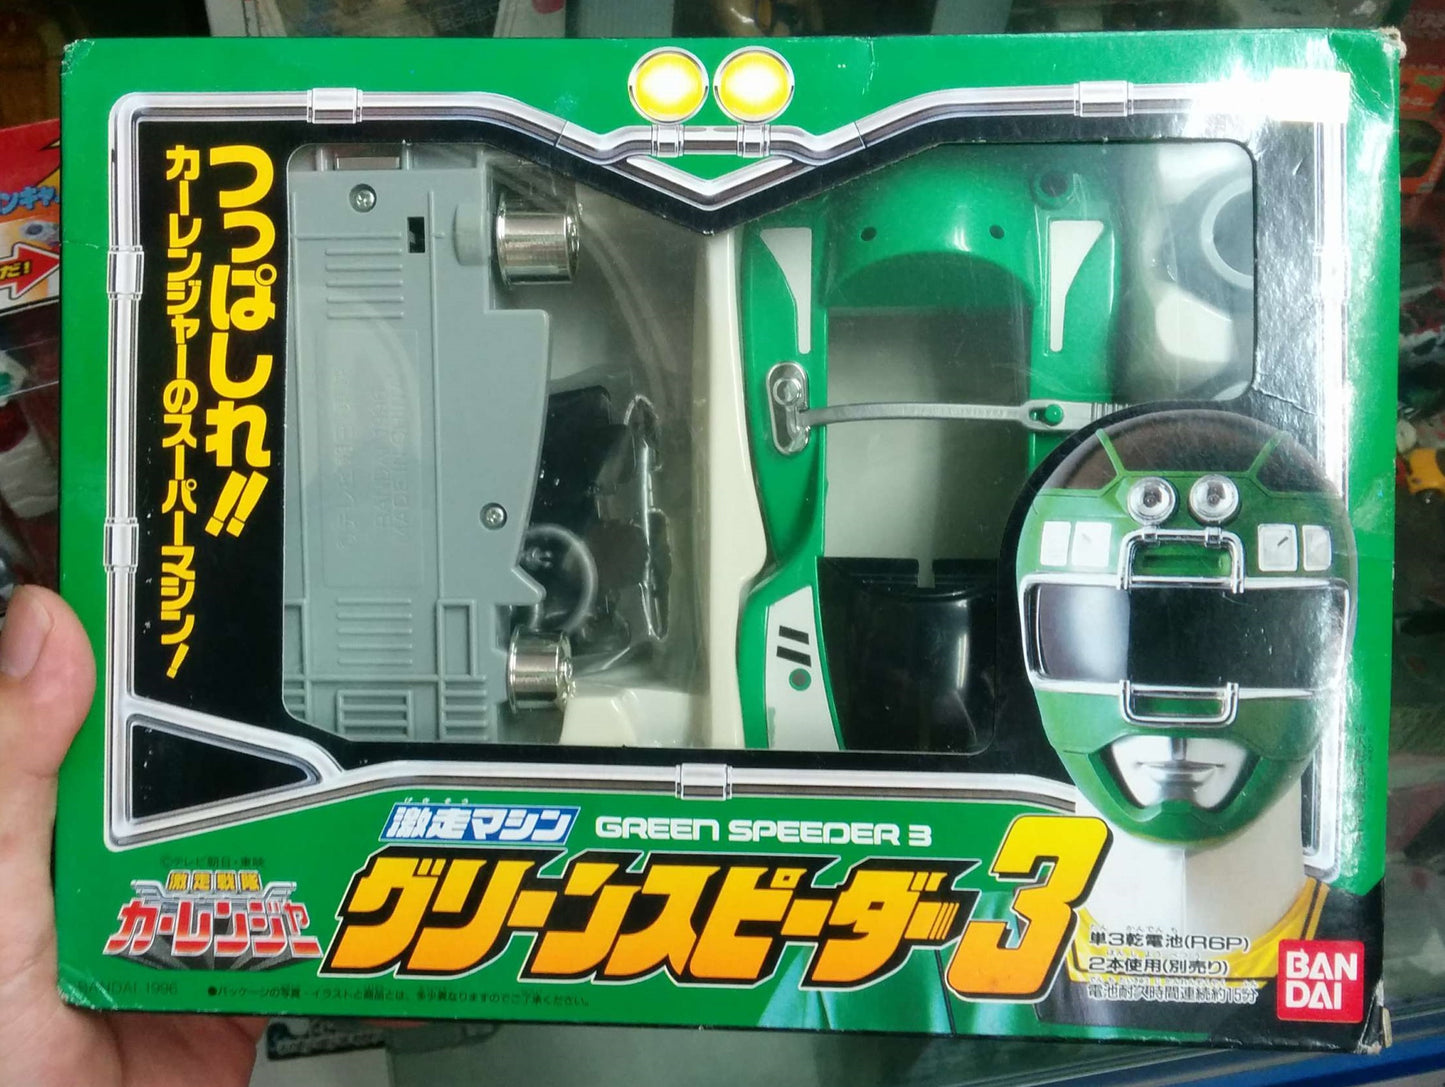 Bandai Power Rangers Turbo Carranger Green Speeder 3 Action Figure - Lavits Figure
